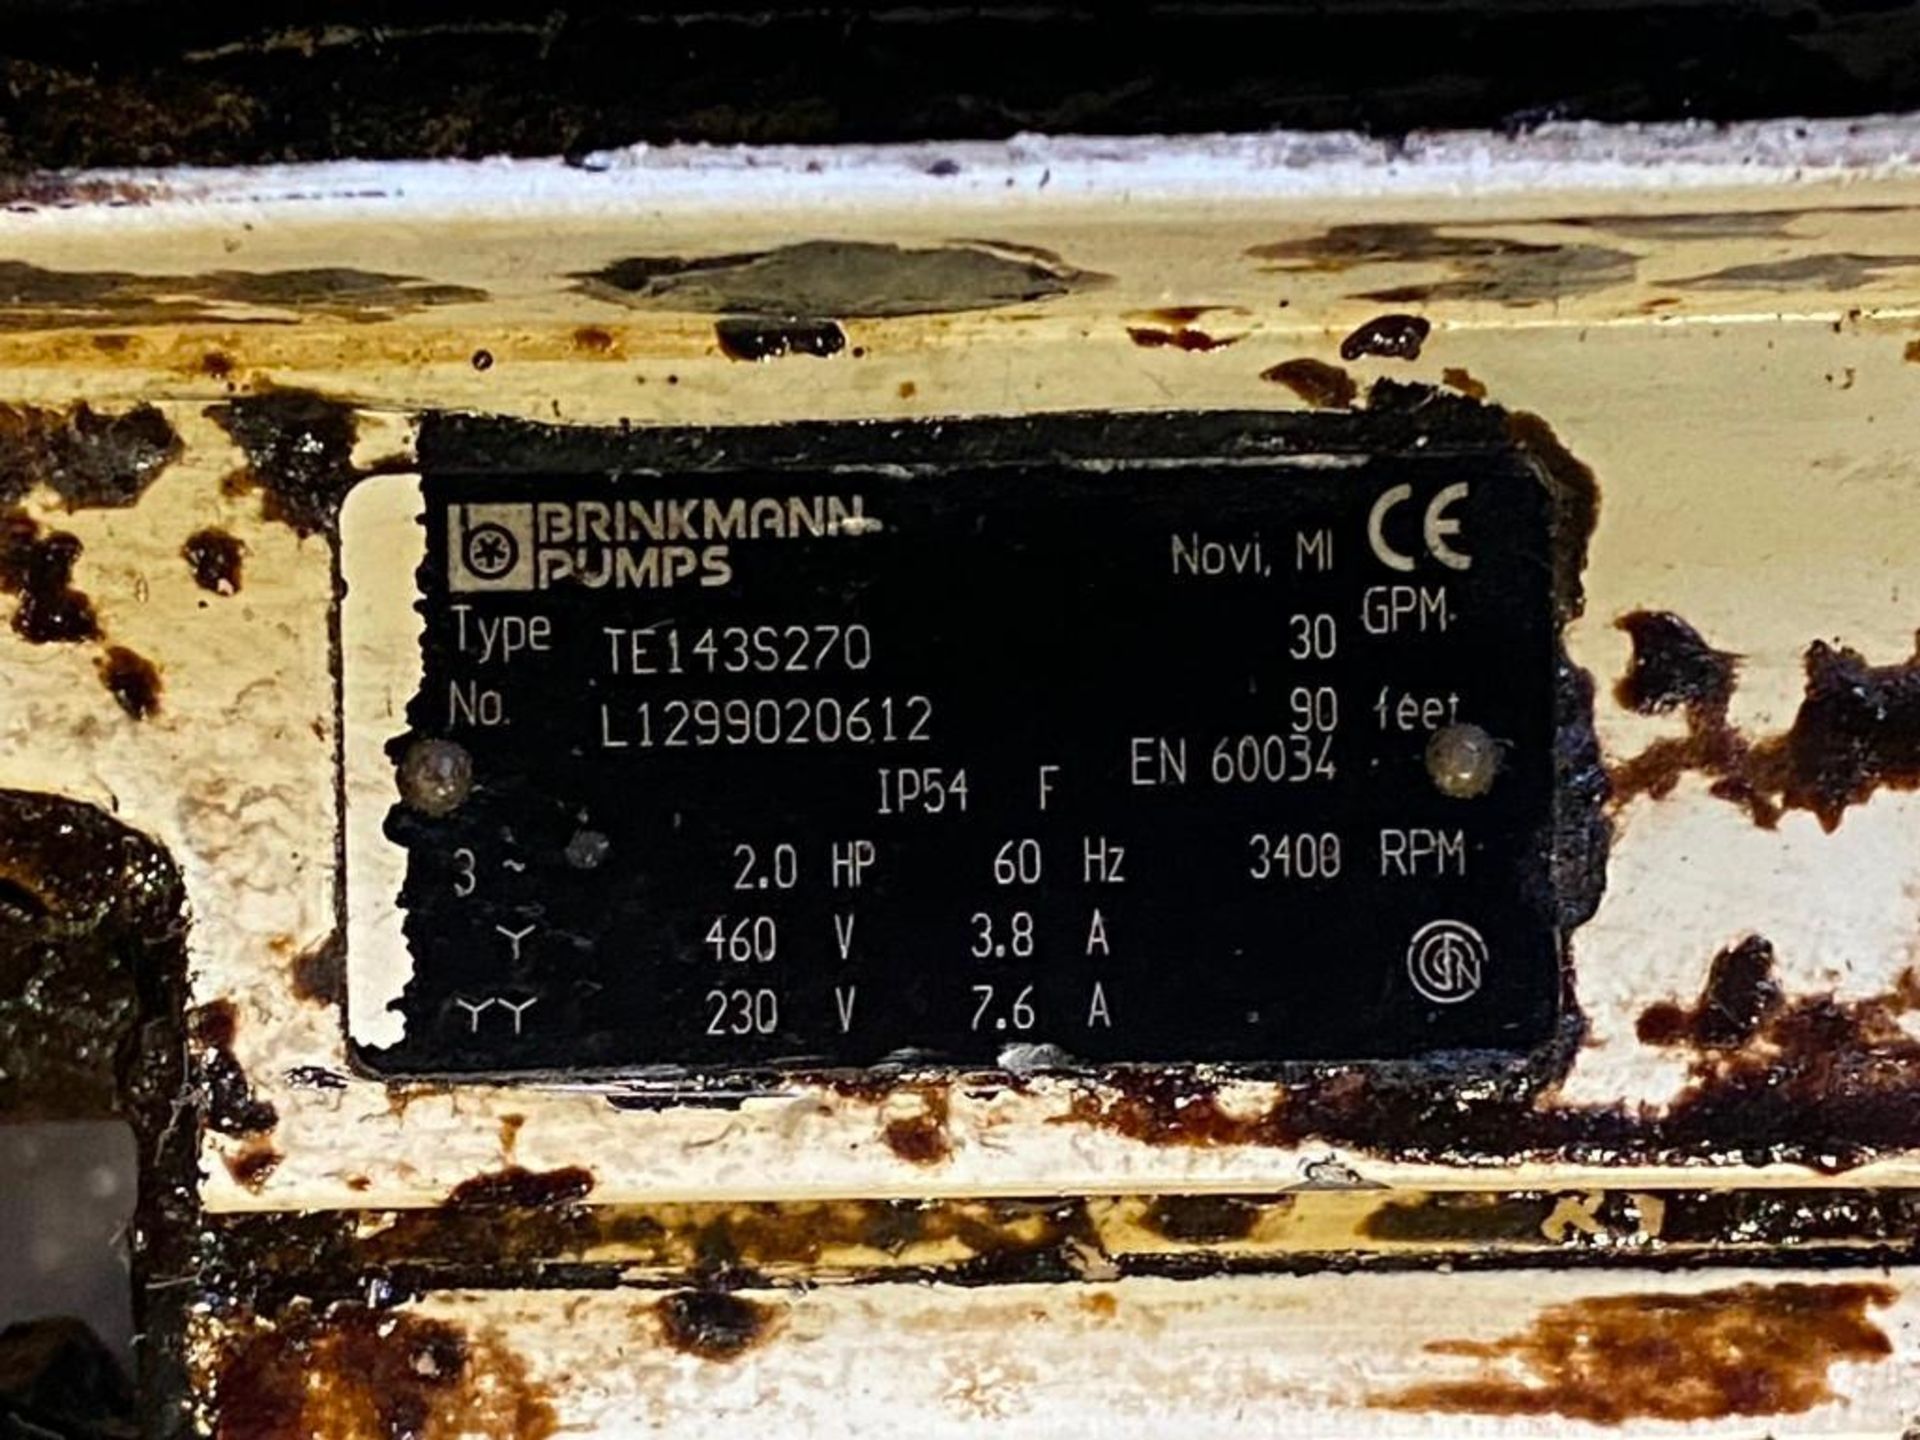 Brinkmann Pumps #TE143S270 Pump - Image 3 of 3